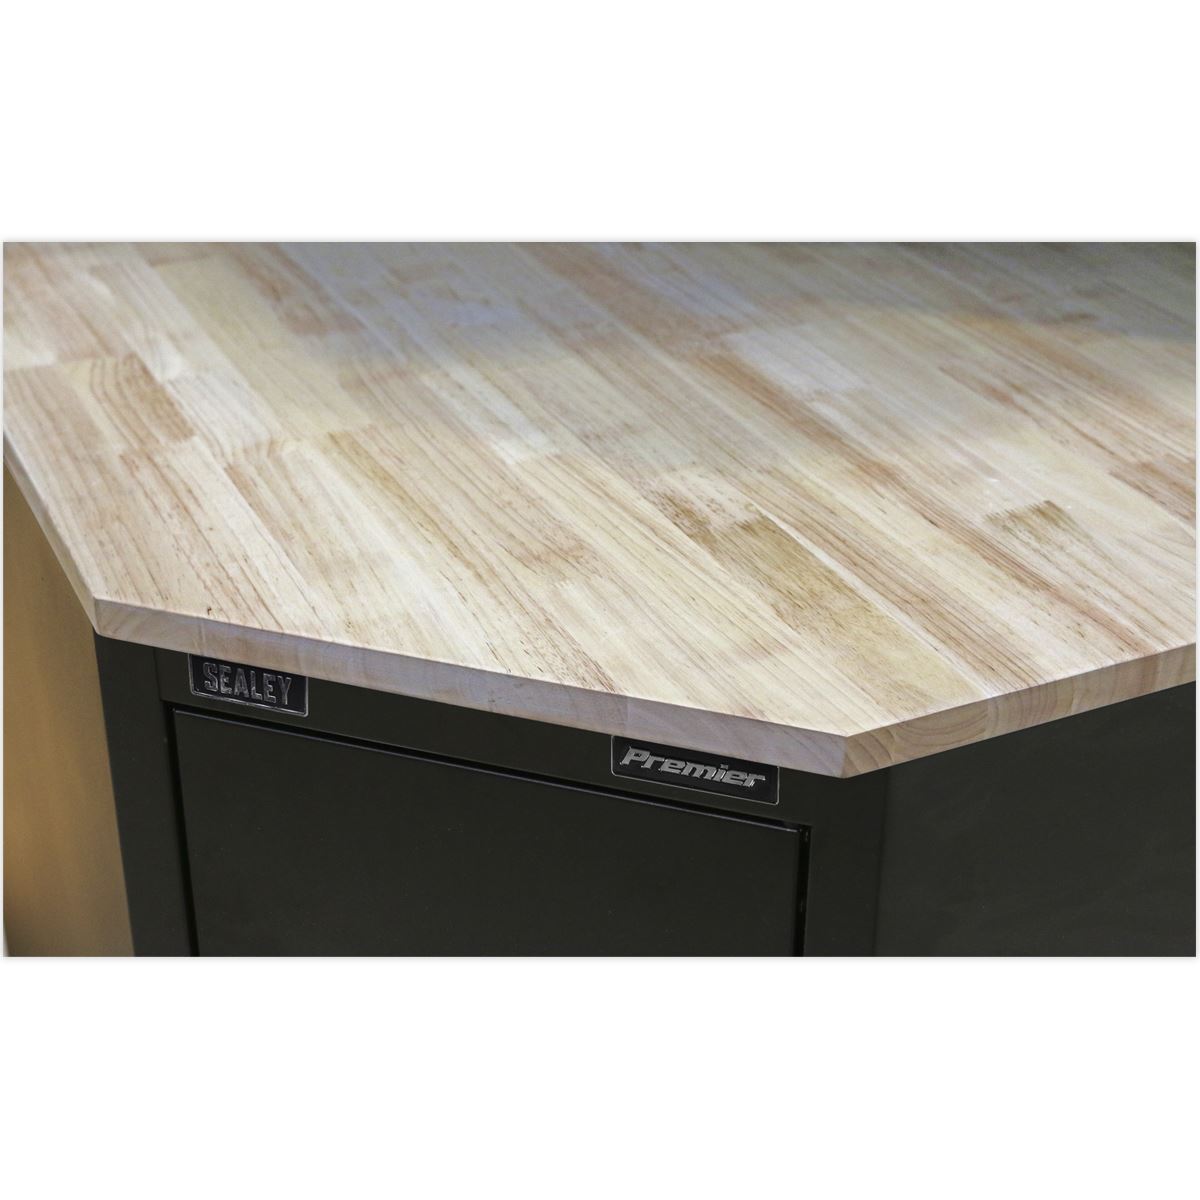 Sealey Premier Hardwood Corner Worktop 930mm